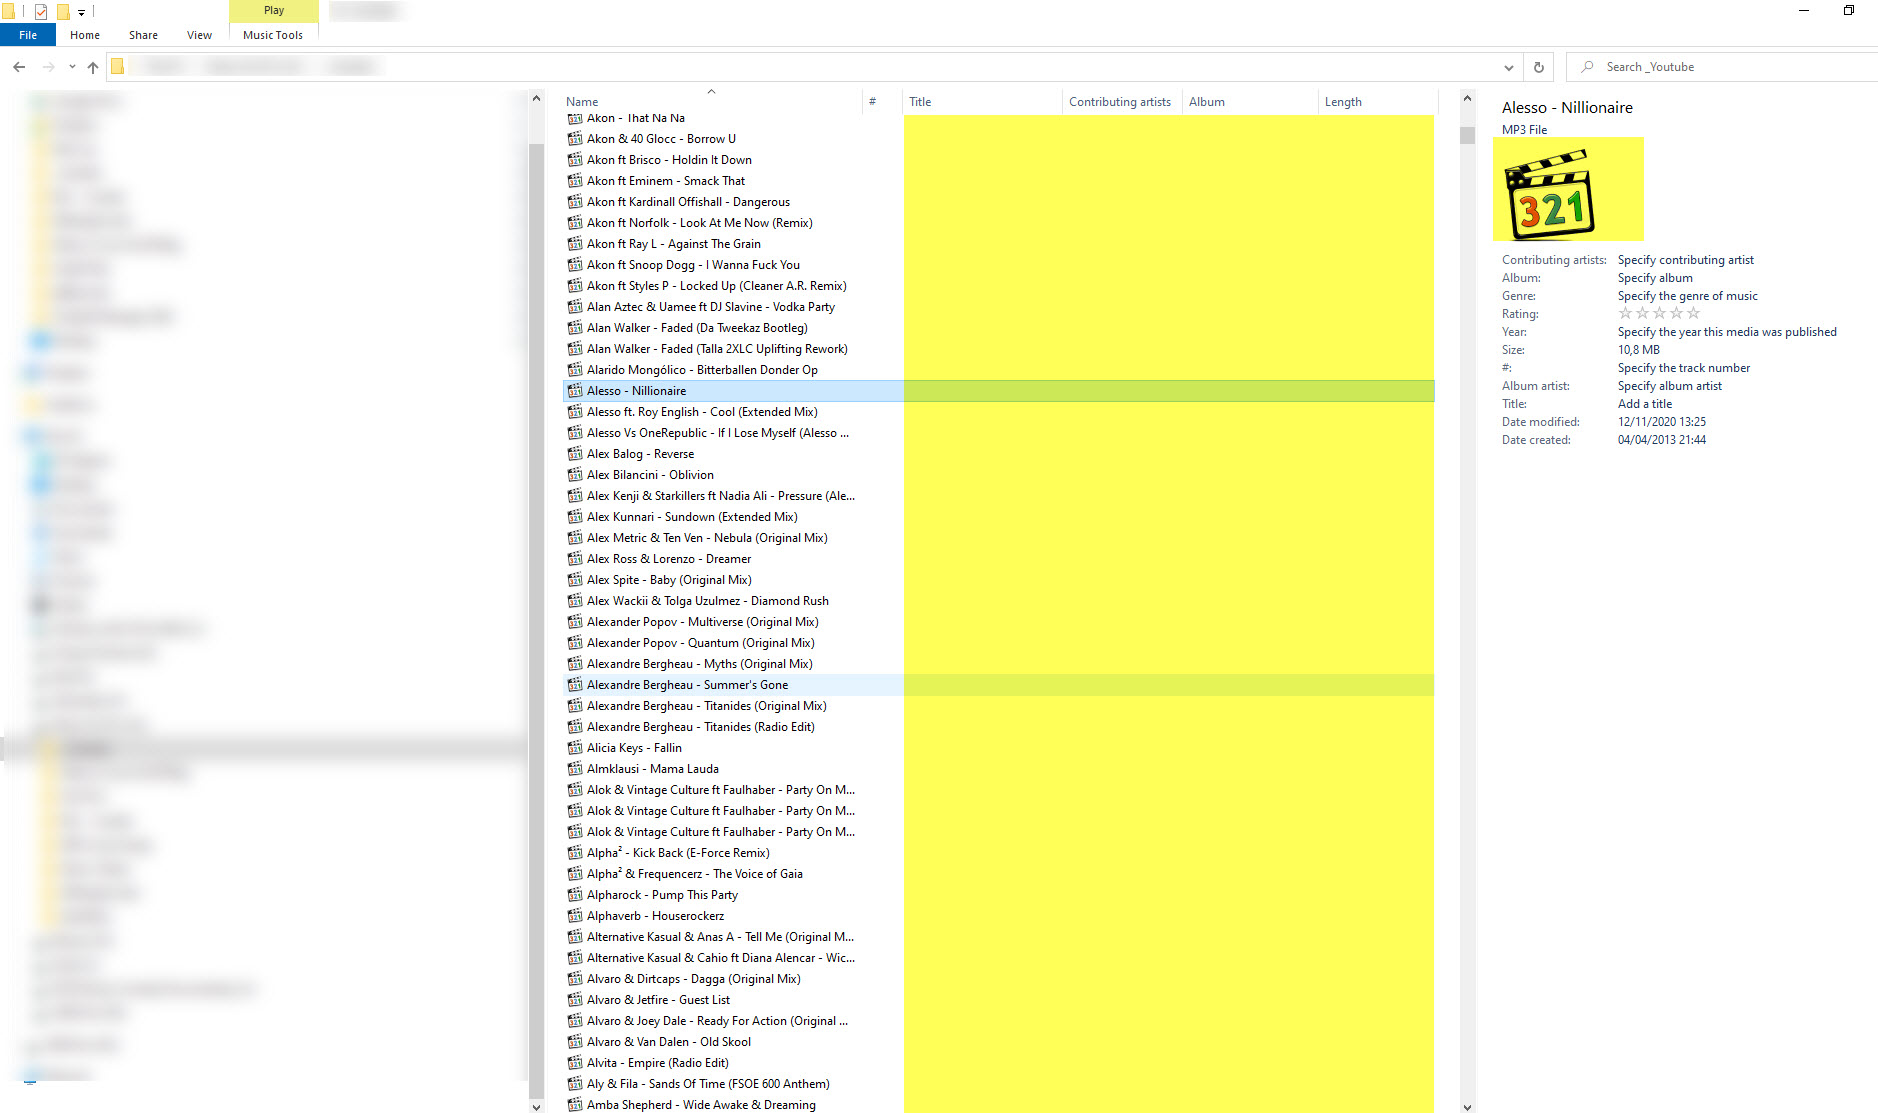 Windows 10 Explorer - No thumbnails and data like 'lenght' for MP3 / MP4 / PDF f70ef68e-5974-4961-ba1d-5d65ff9b3e13?upload=true.jpg